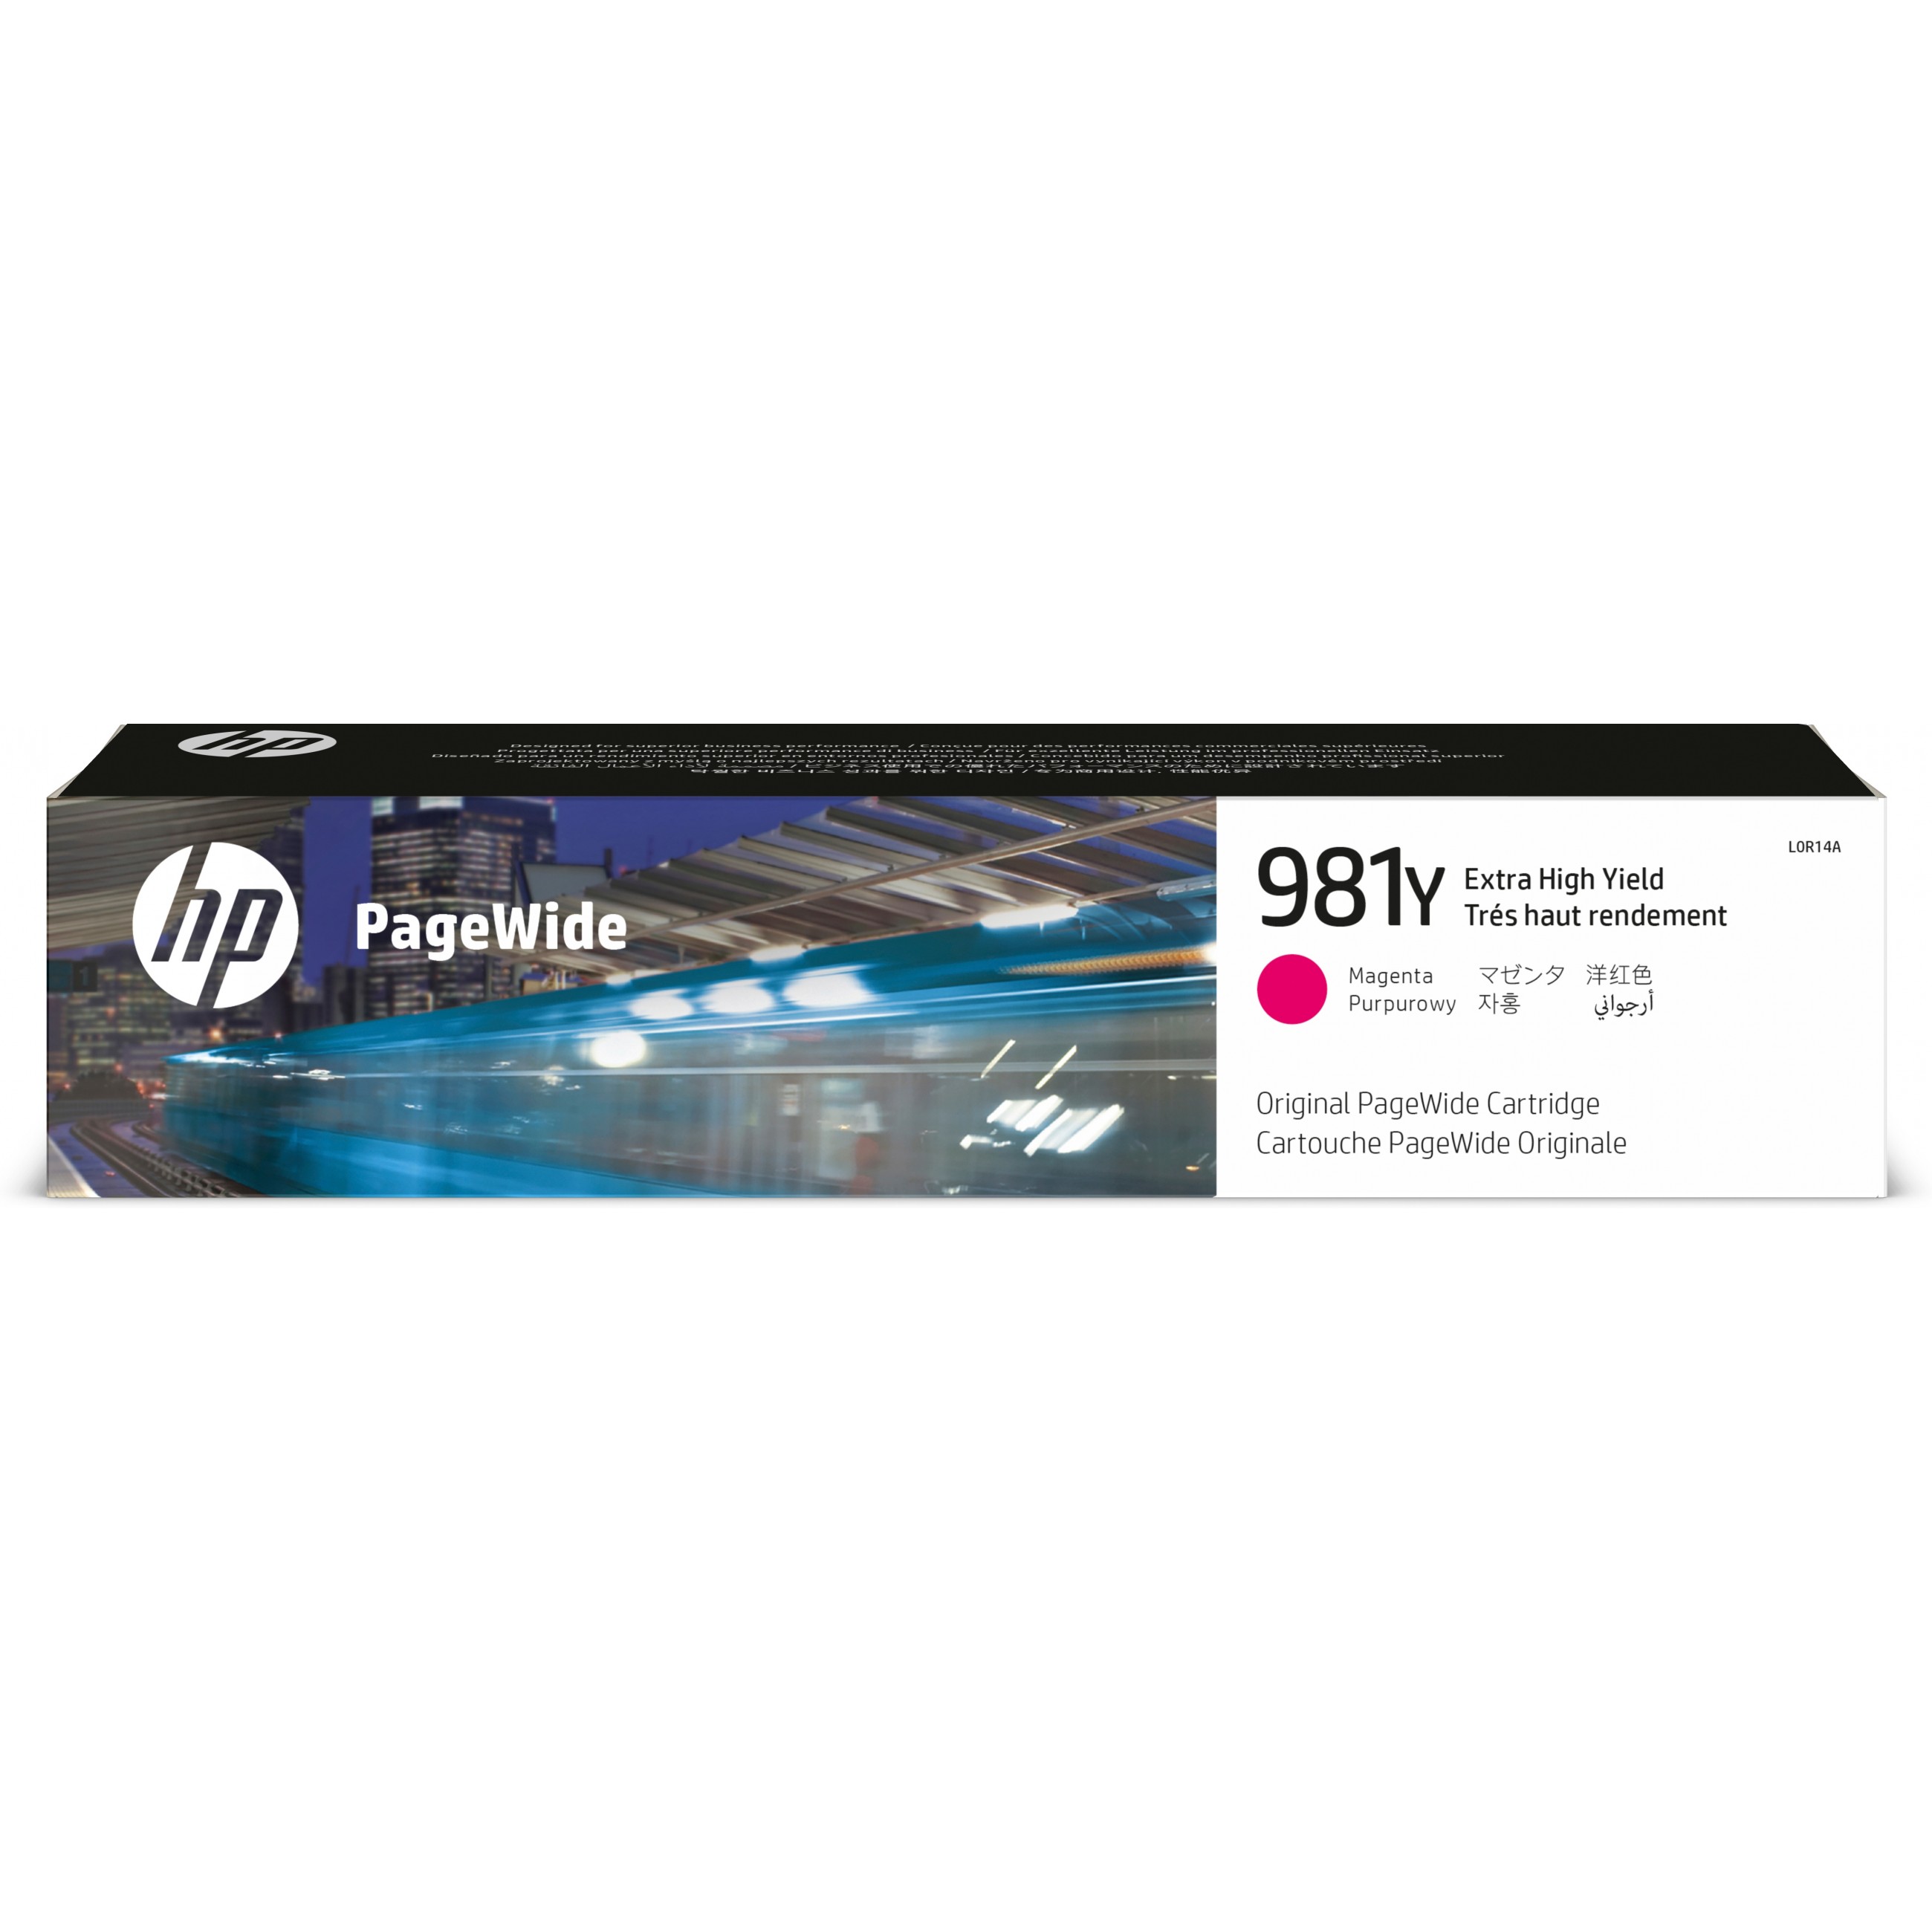 HP 981Y Extra High Yield Magenta Original PageWide Cartridge ink - L0R14A